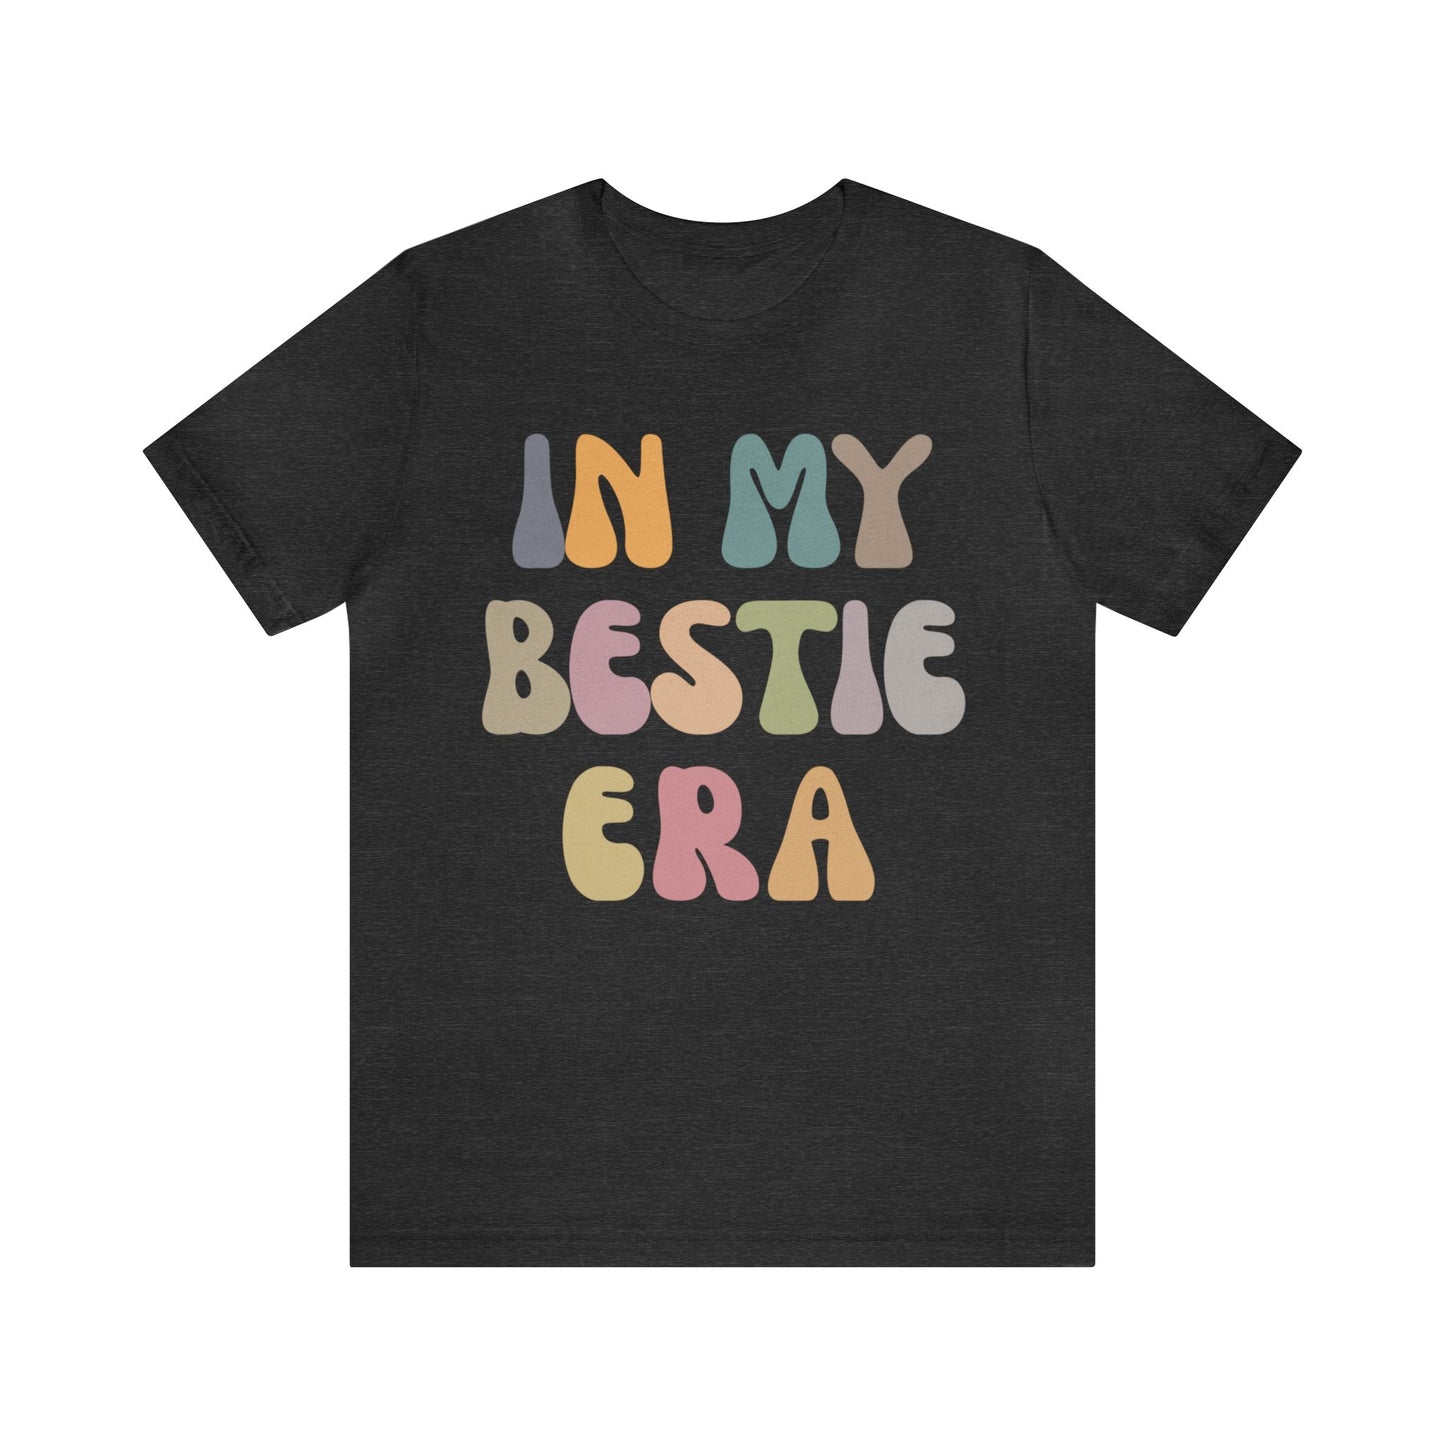 In My Bestie Era Shirt, Gift for Best Friend, BFF Shirt for Women, Friendship Gift, Best Friends Forever Shirt, Matching Bestie Shirt, T1426